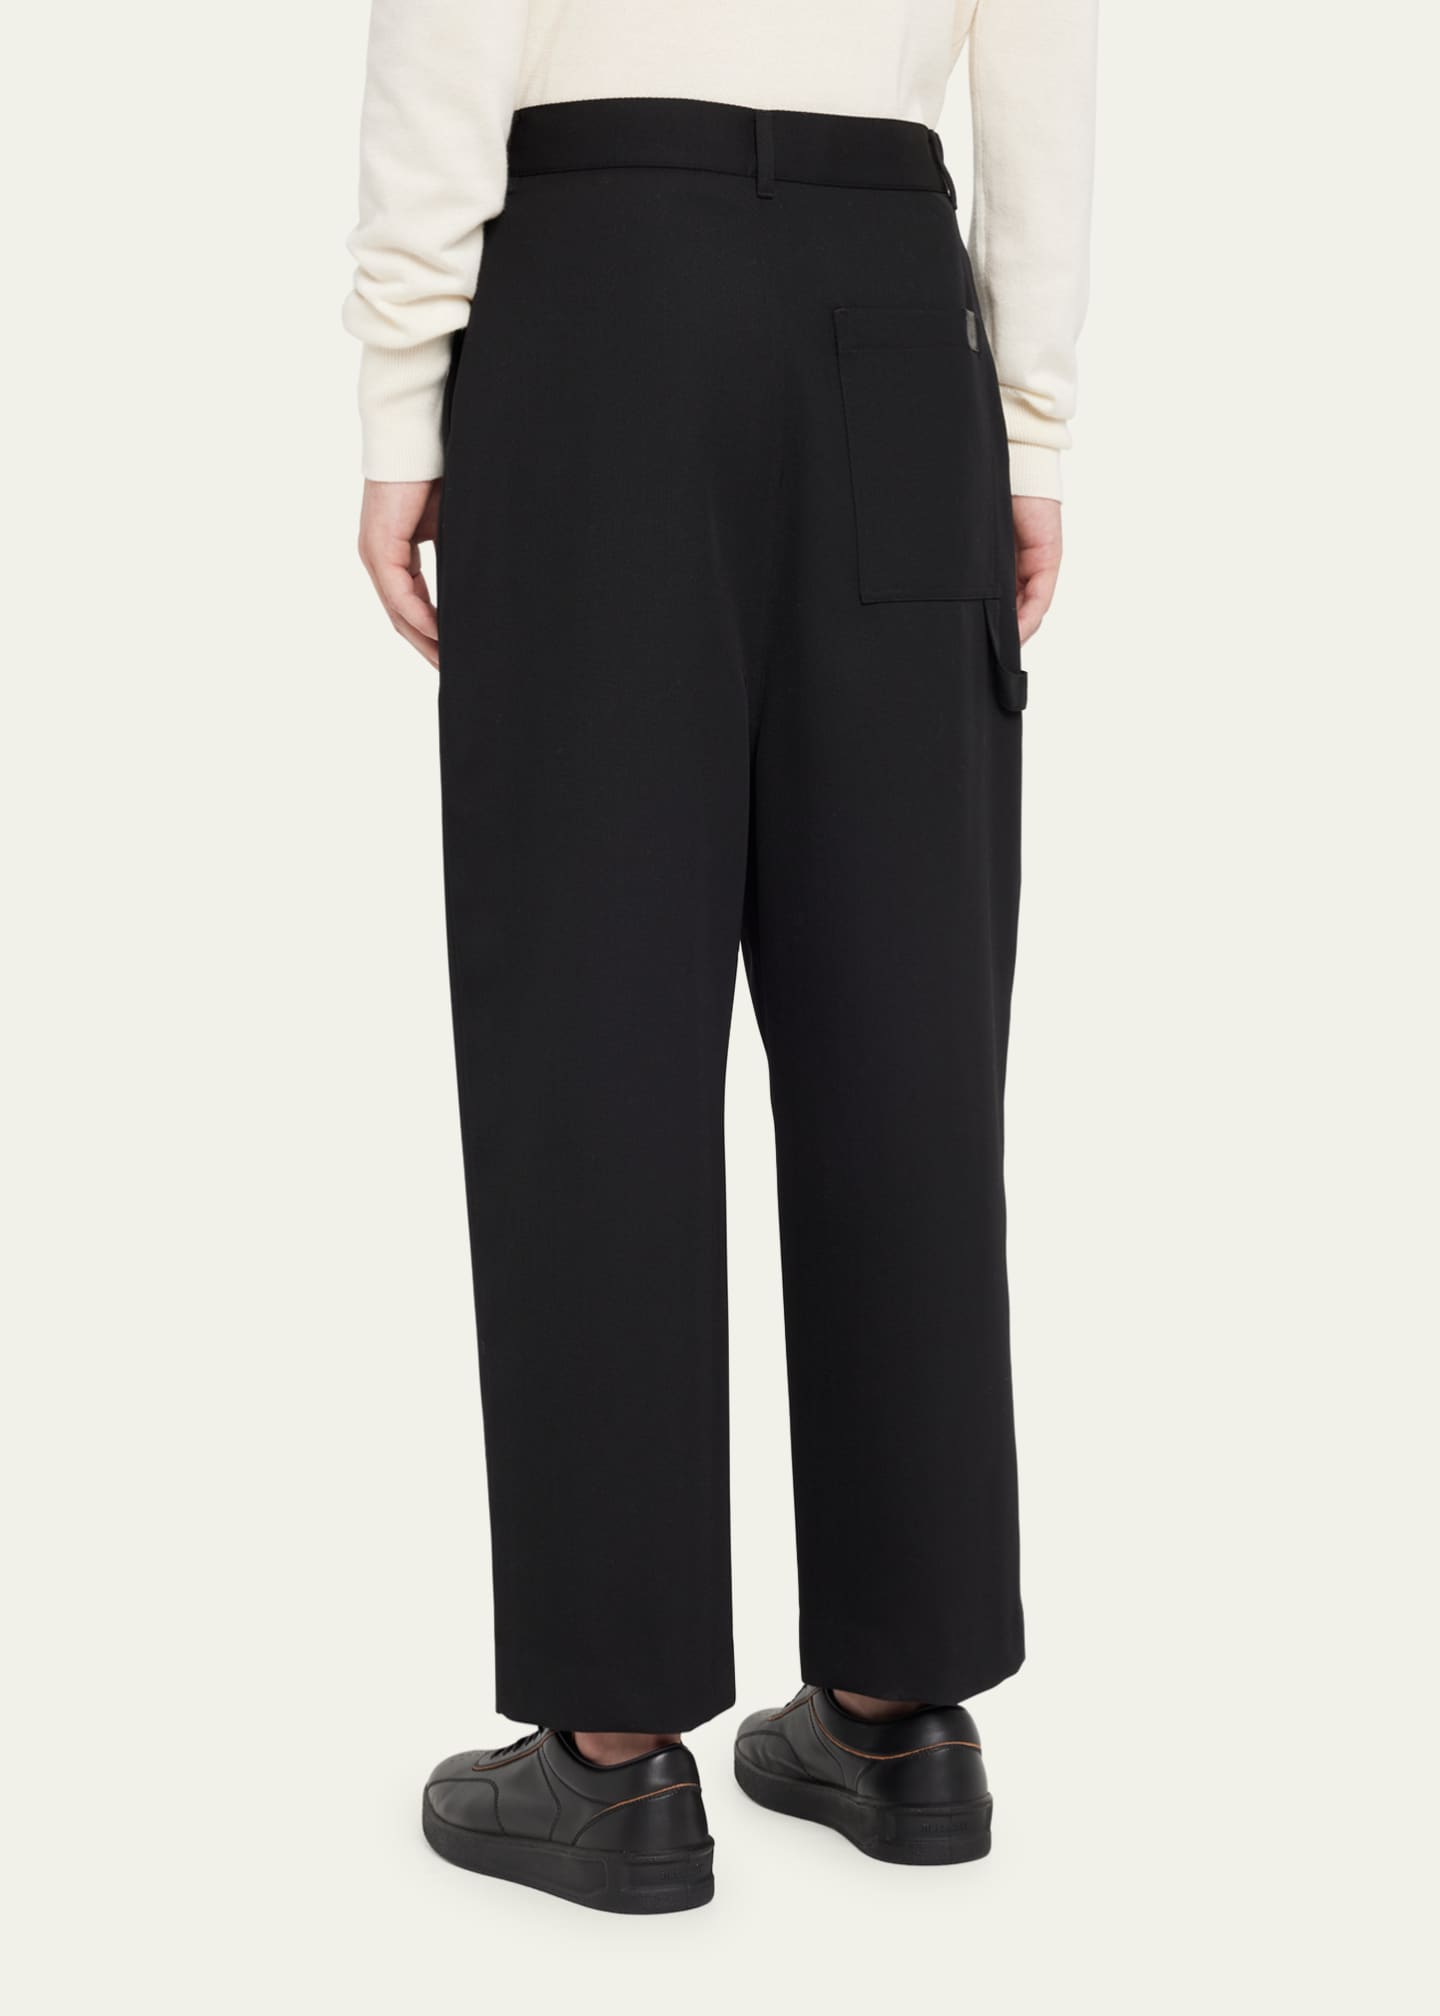 Loewe Men's Low-Crotch Pleated Trousers - Bergdorf Goodman